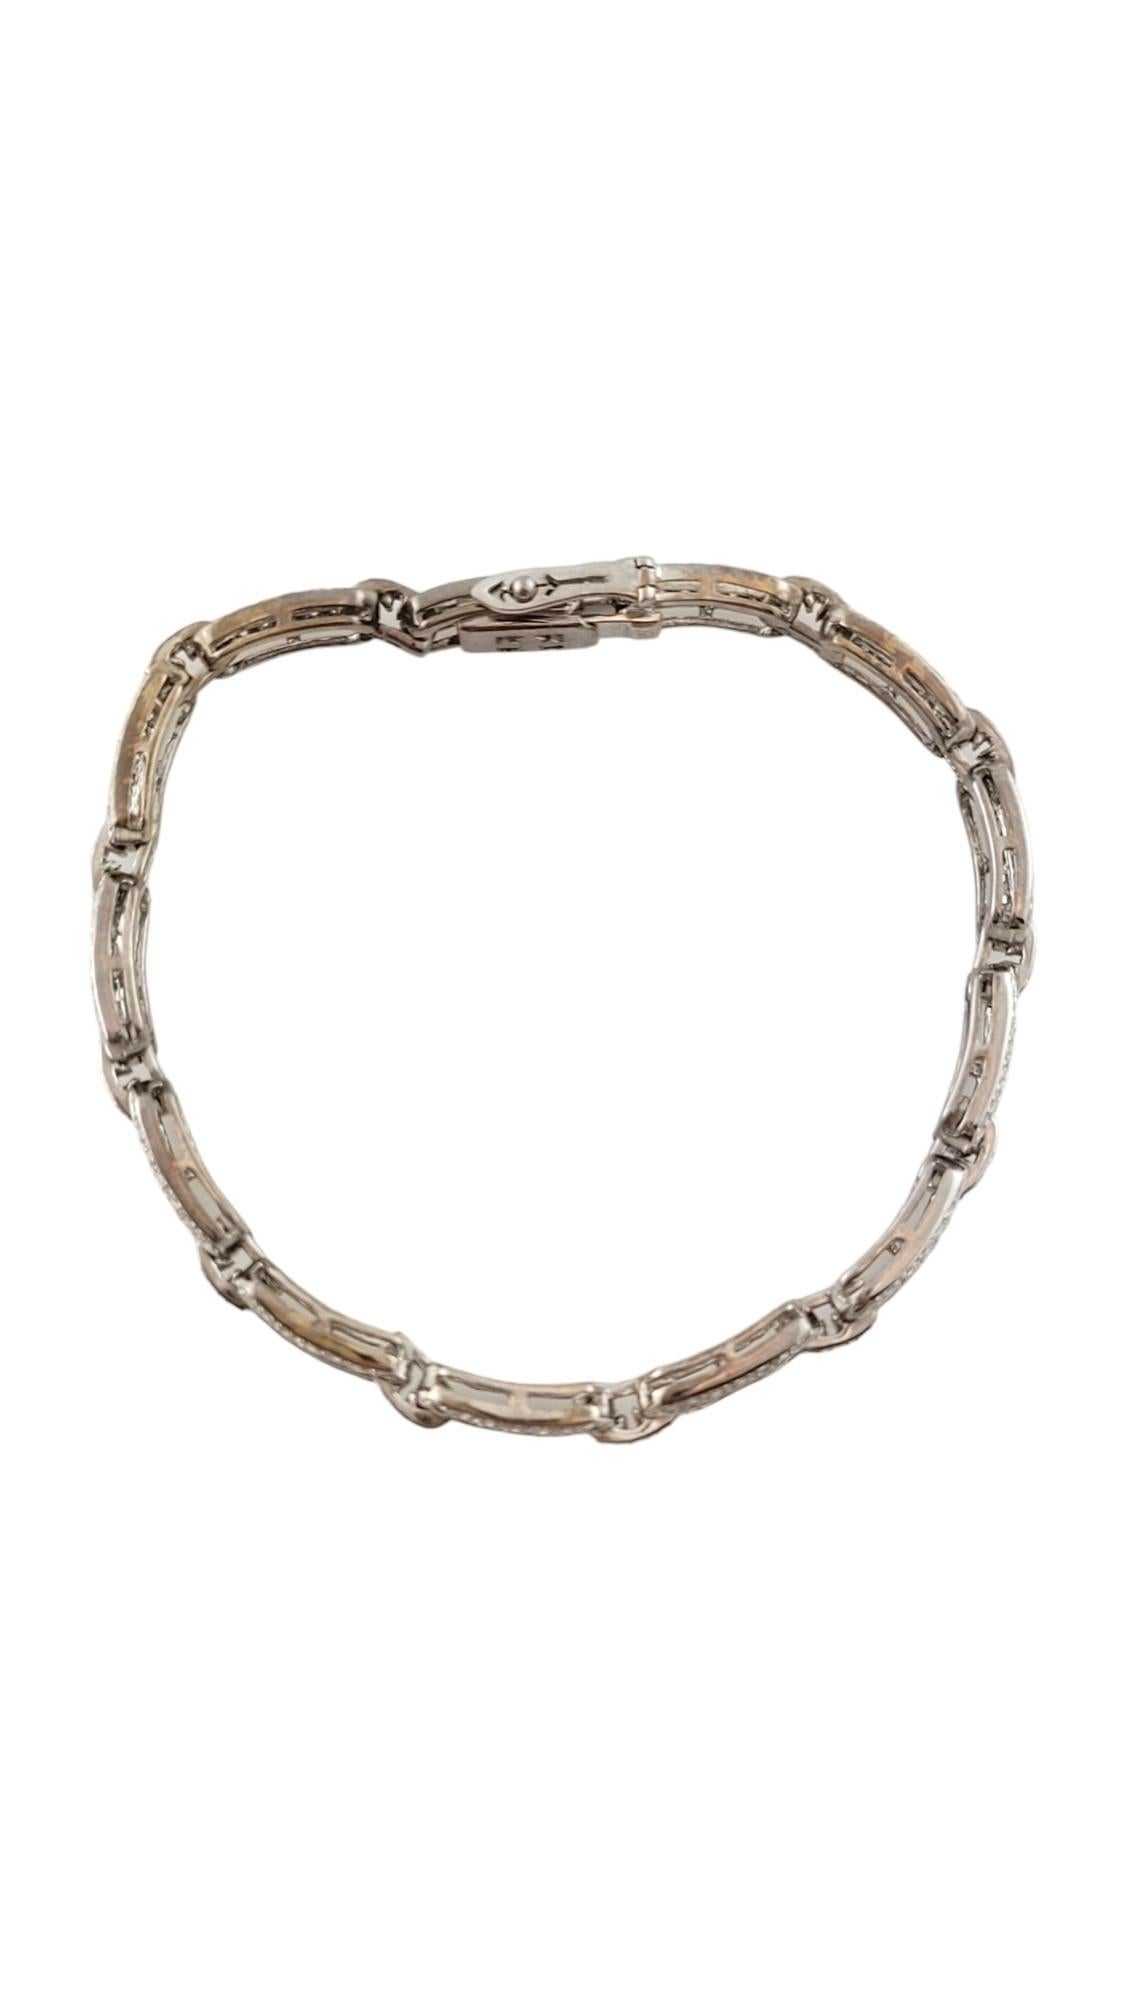 Brilliant Cut 18 Karat White Gold and Diamond Link Bracelet #16972 For Sale